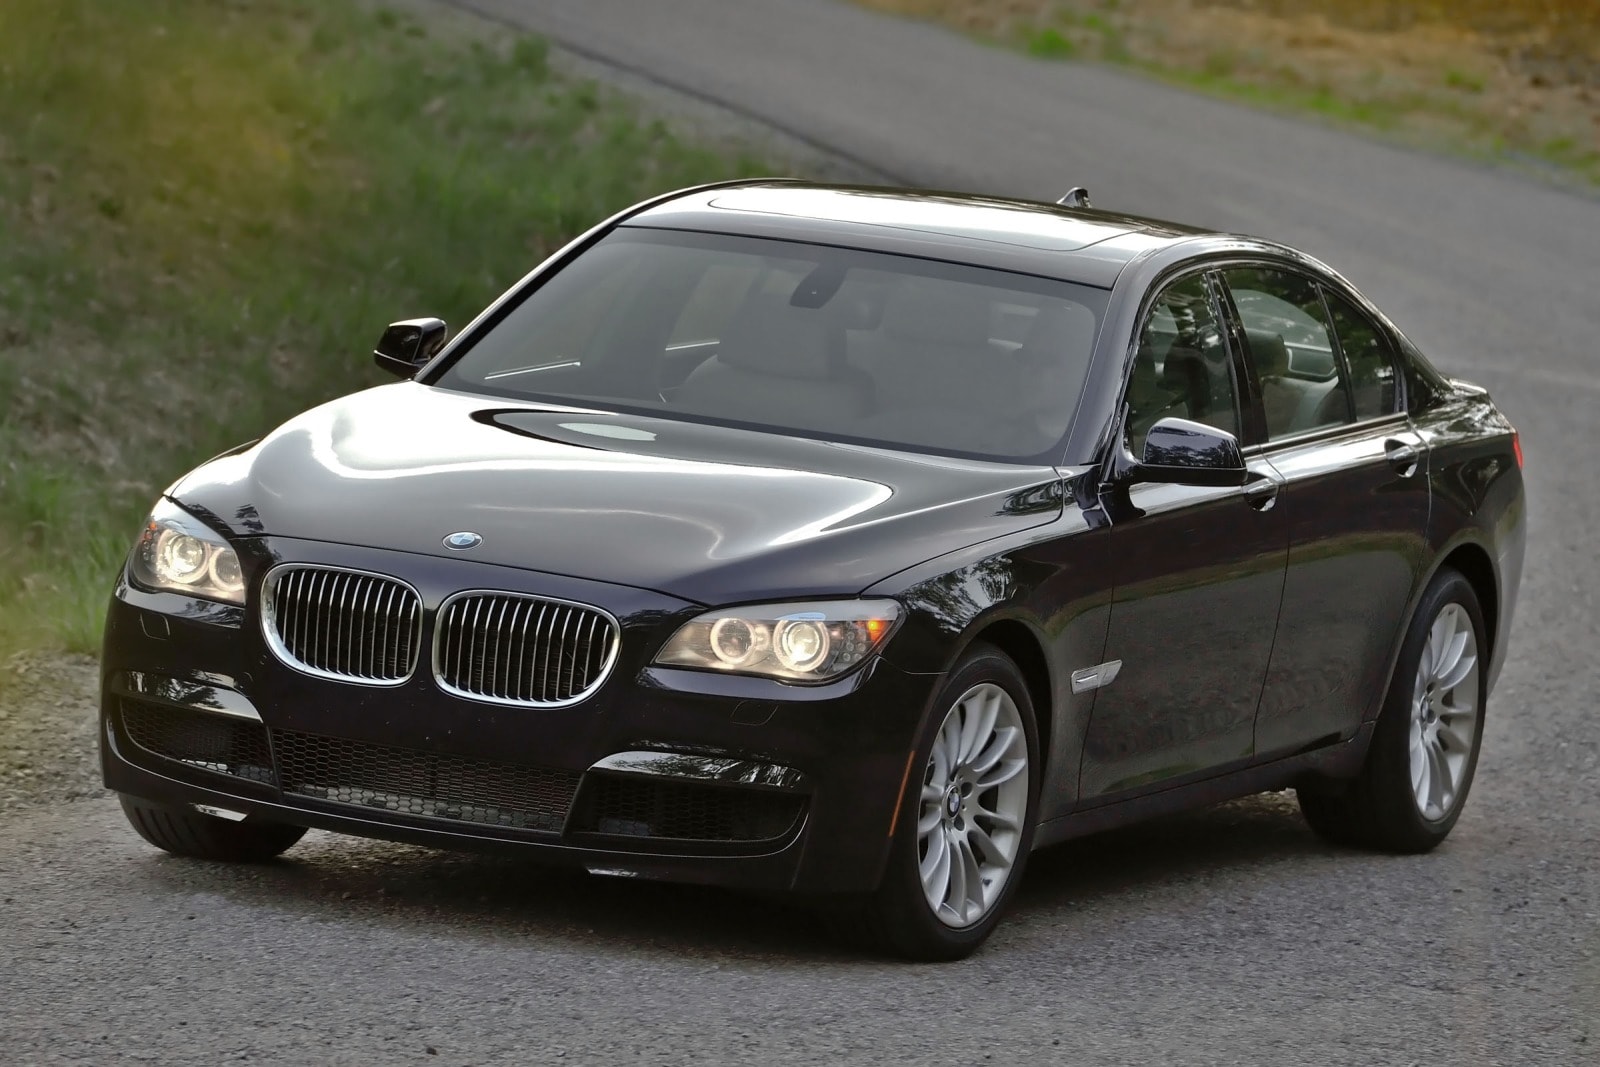 2011 BMW 7 Series Review & Ratings | Edmunds